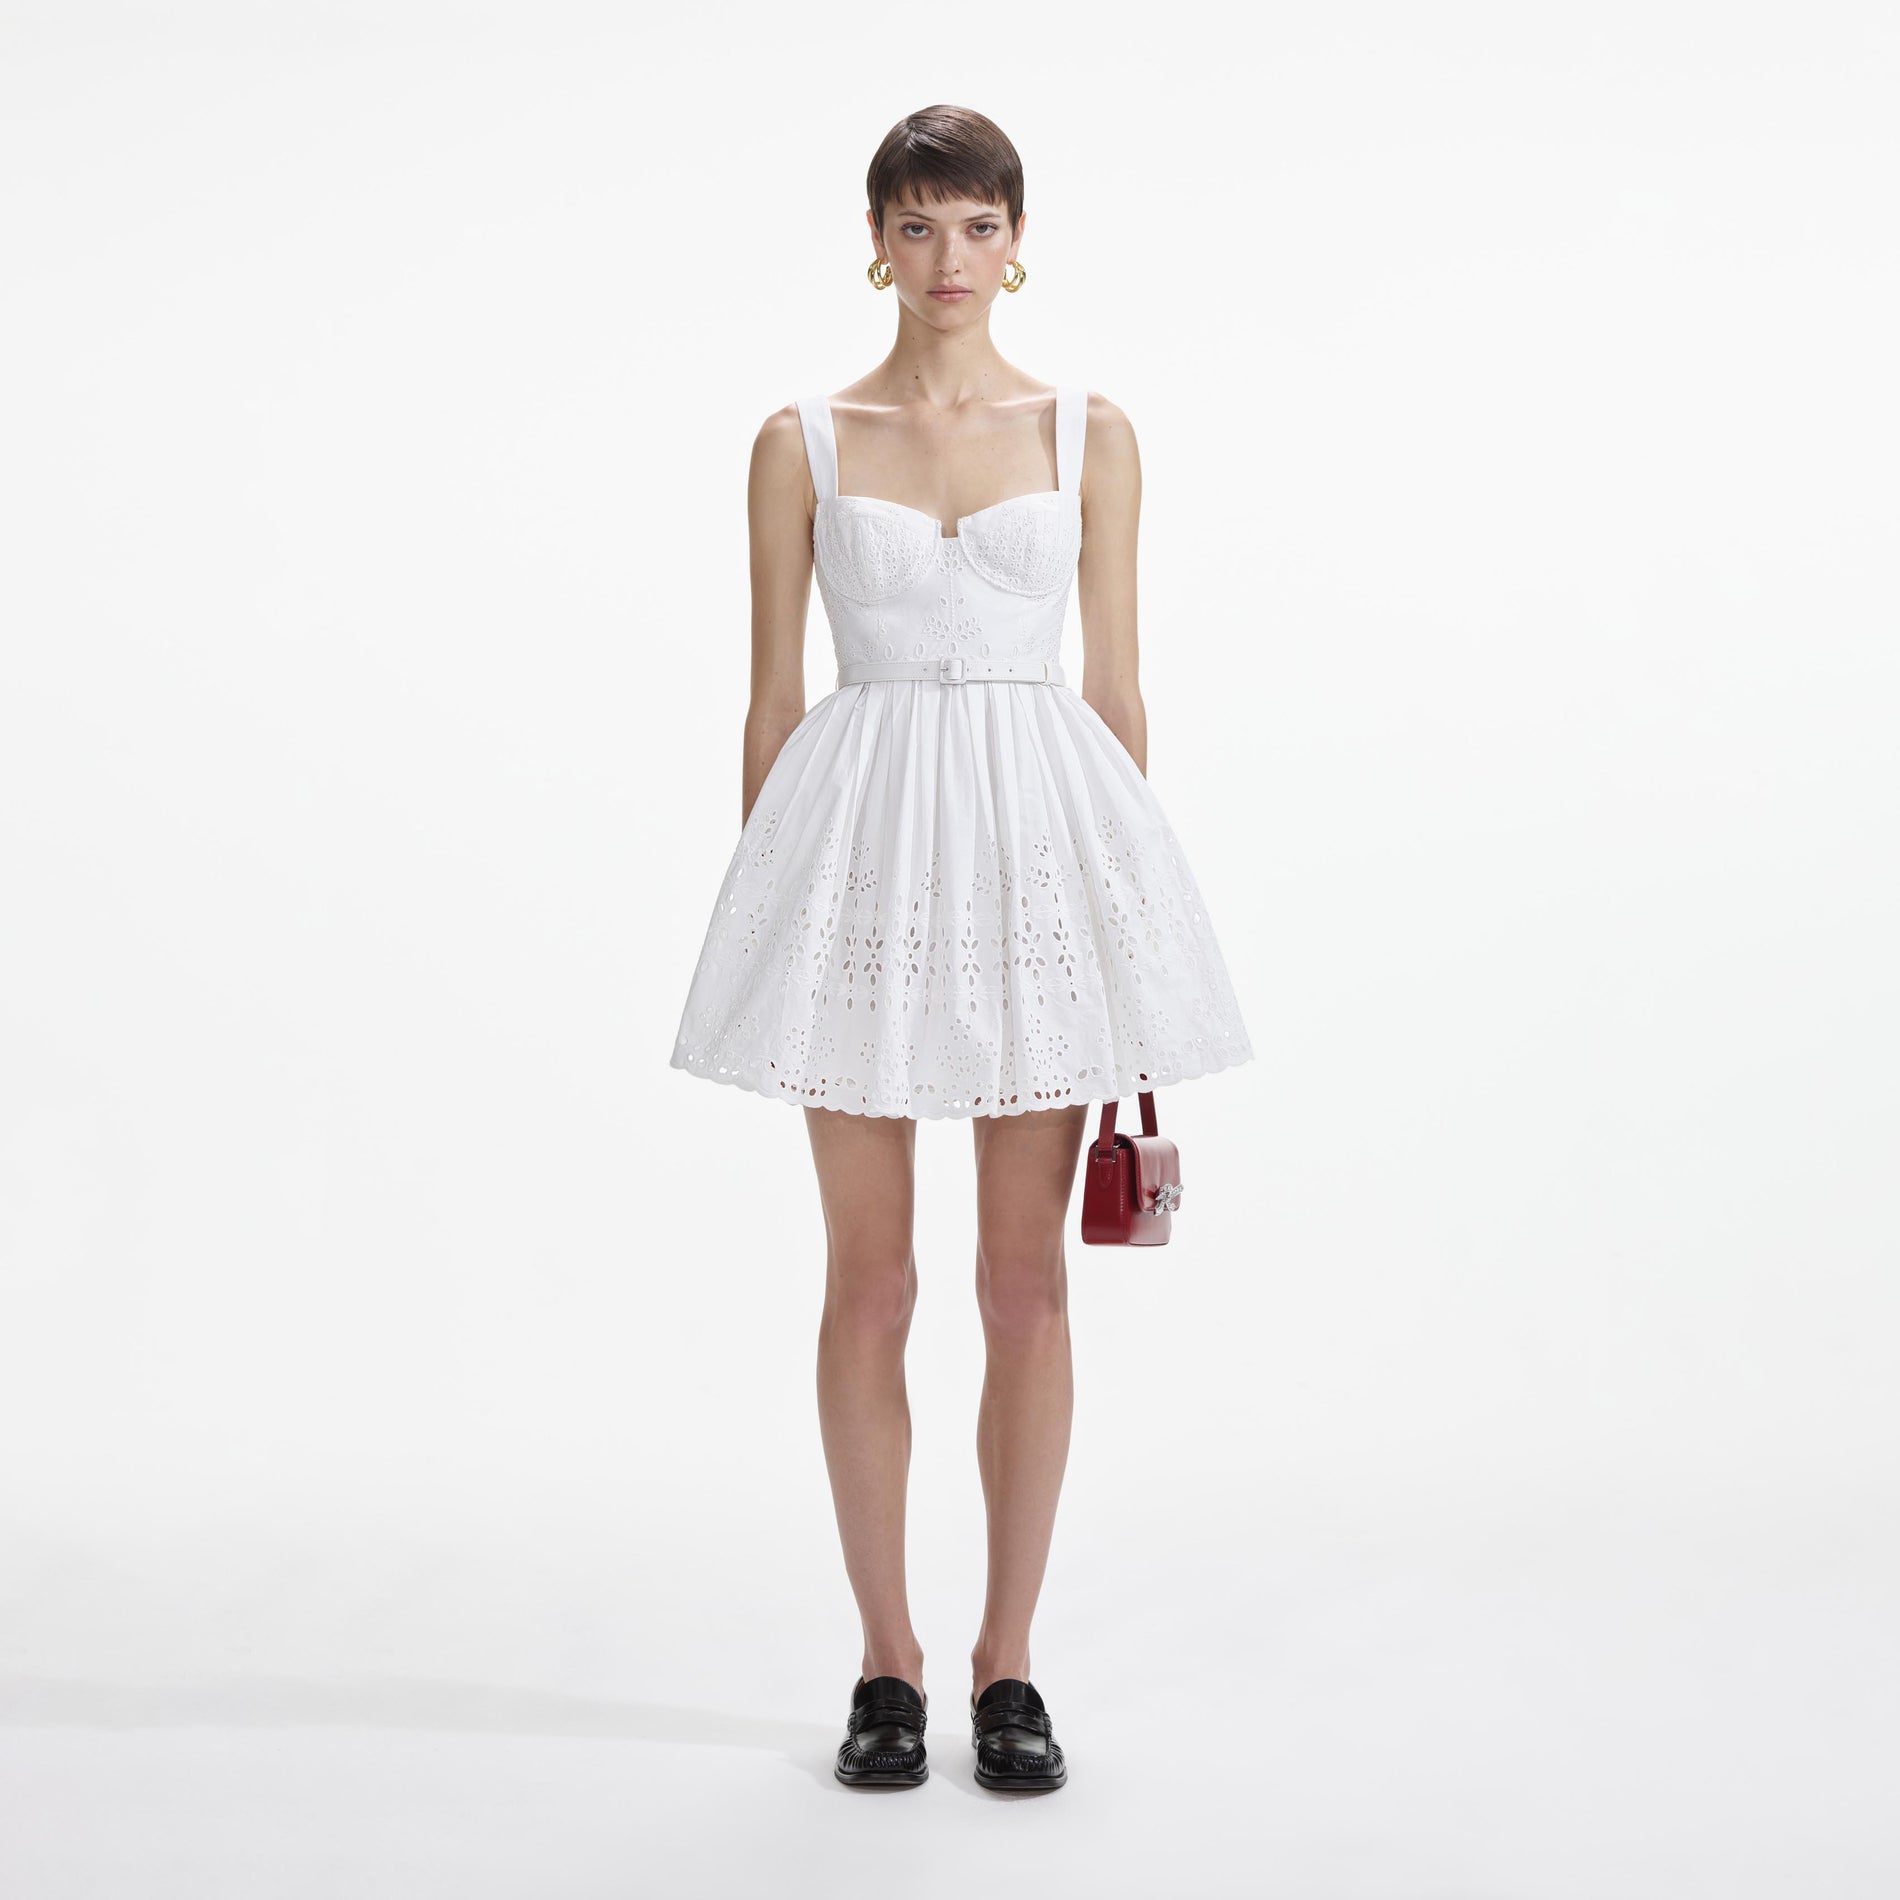 White Cotton Broderie Mini Dress